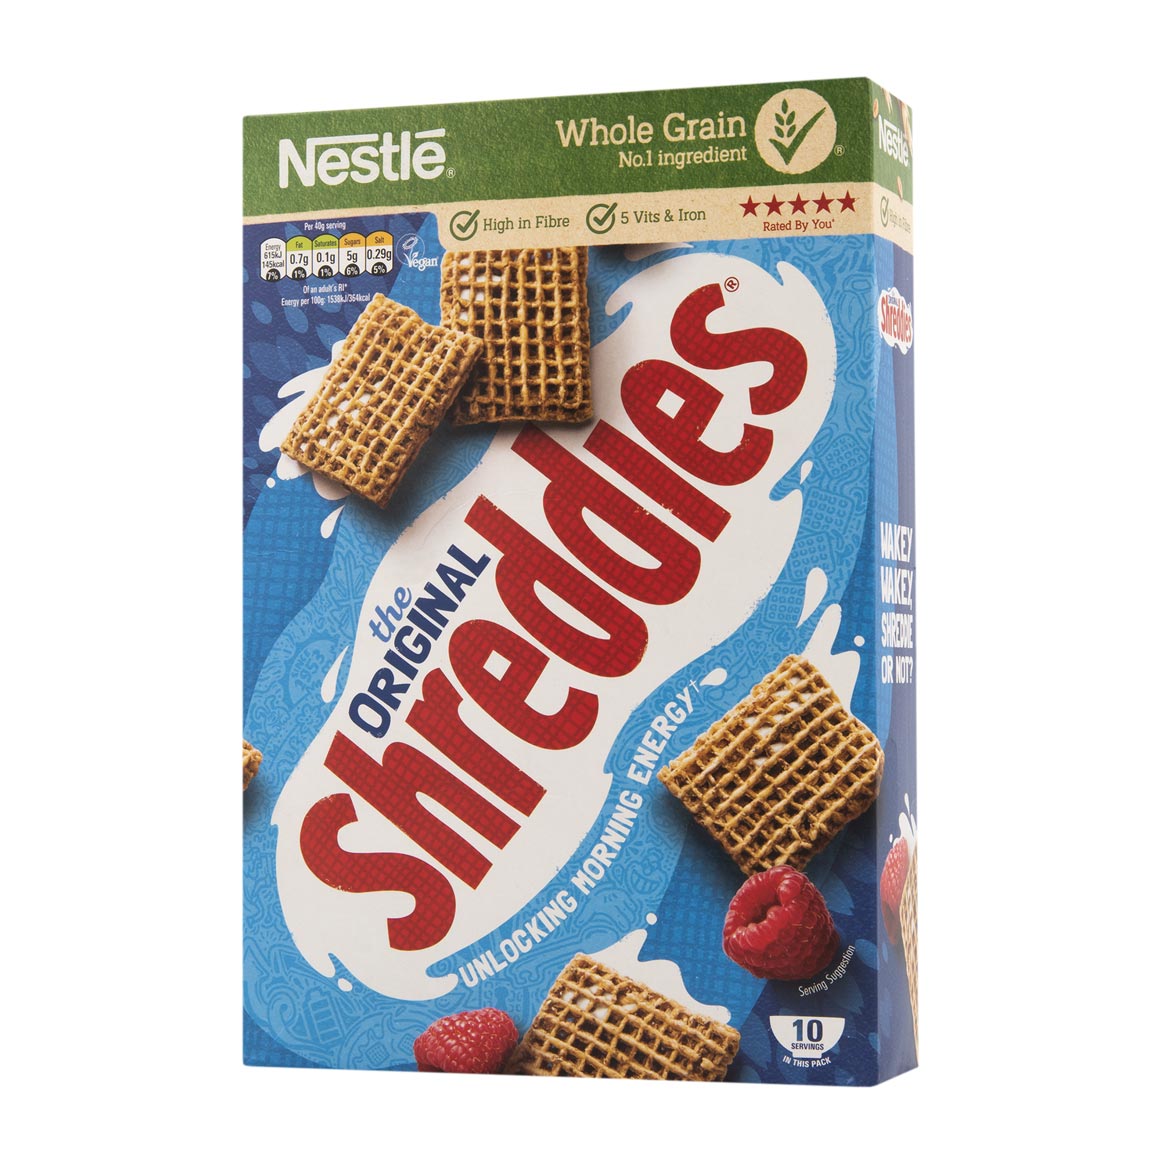 About Shreddies - Shreddies Australia & New Zealand